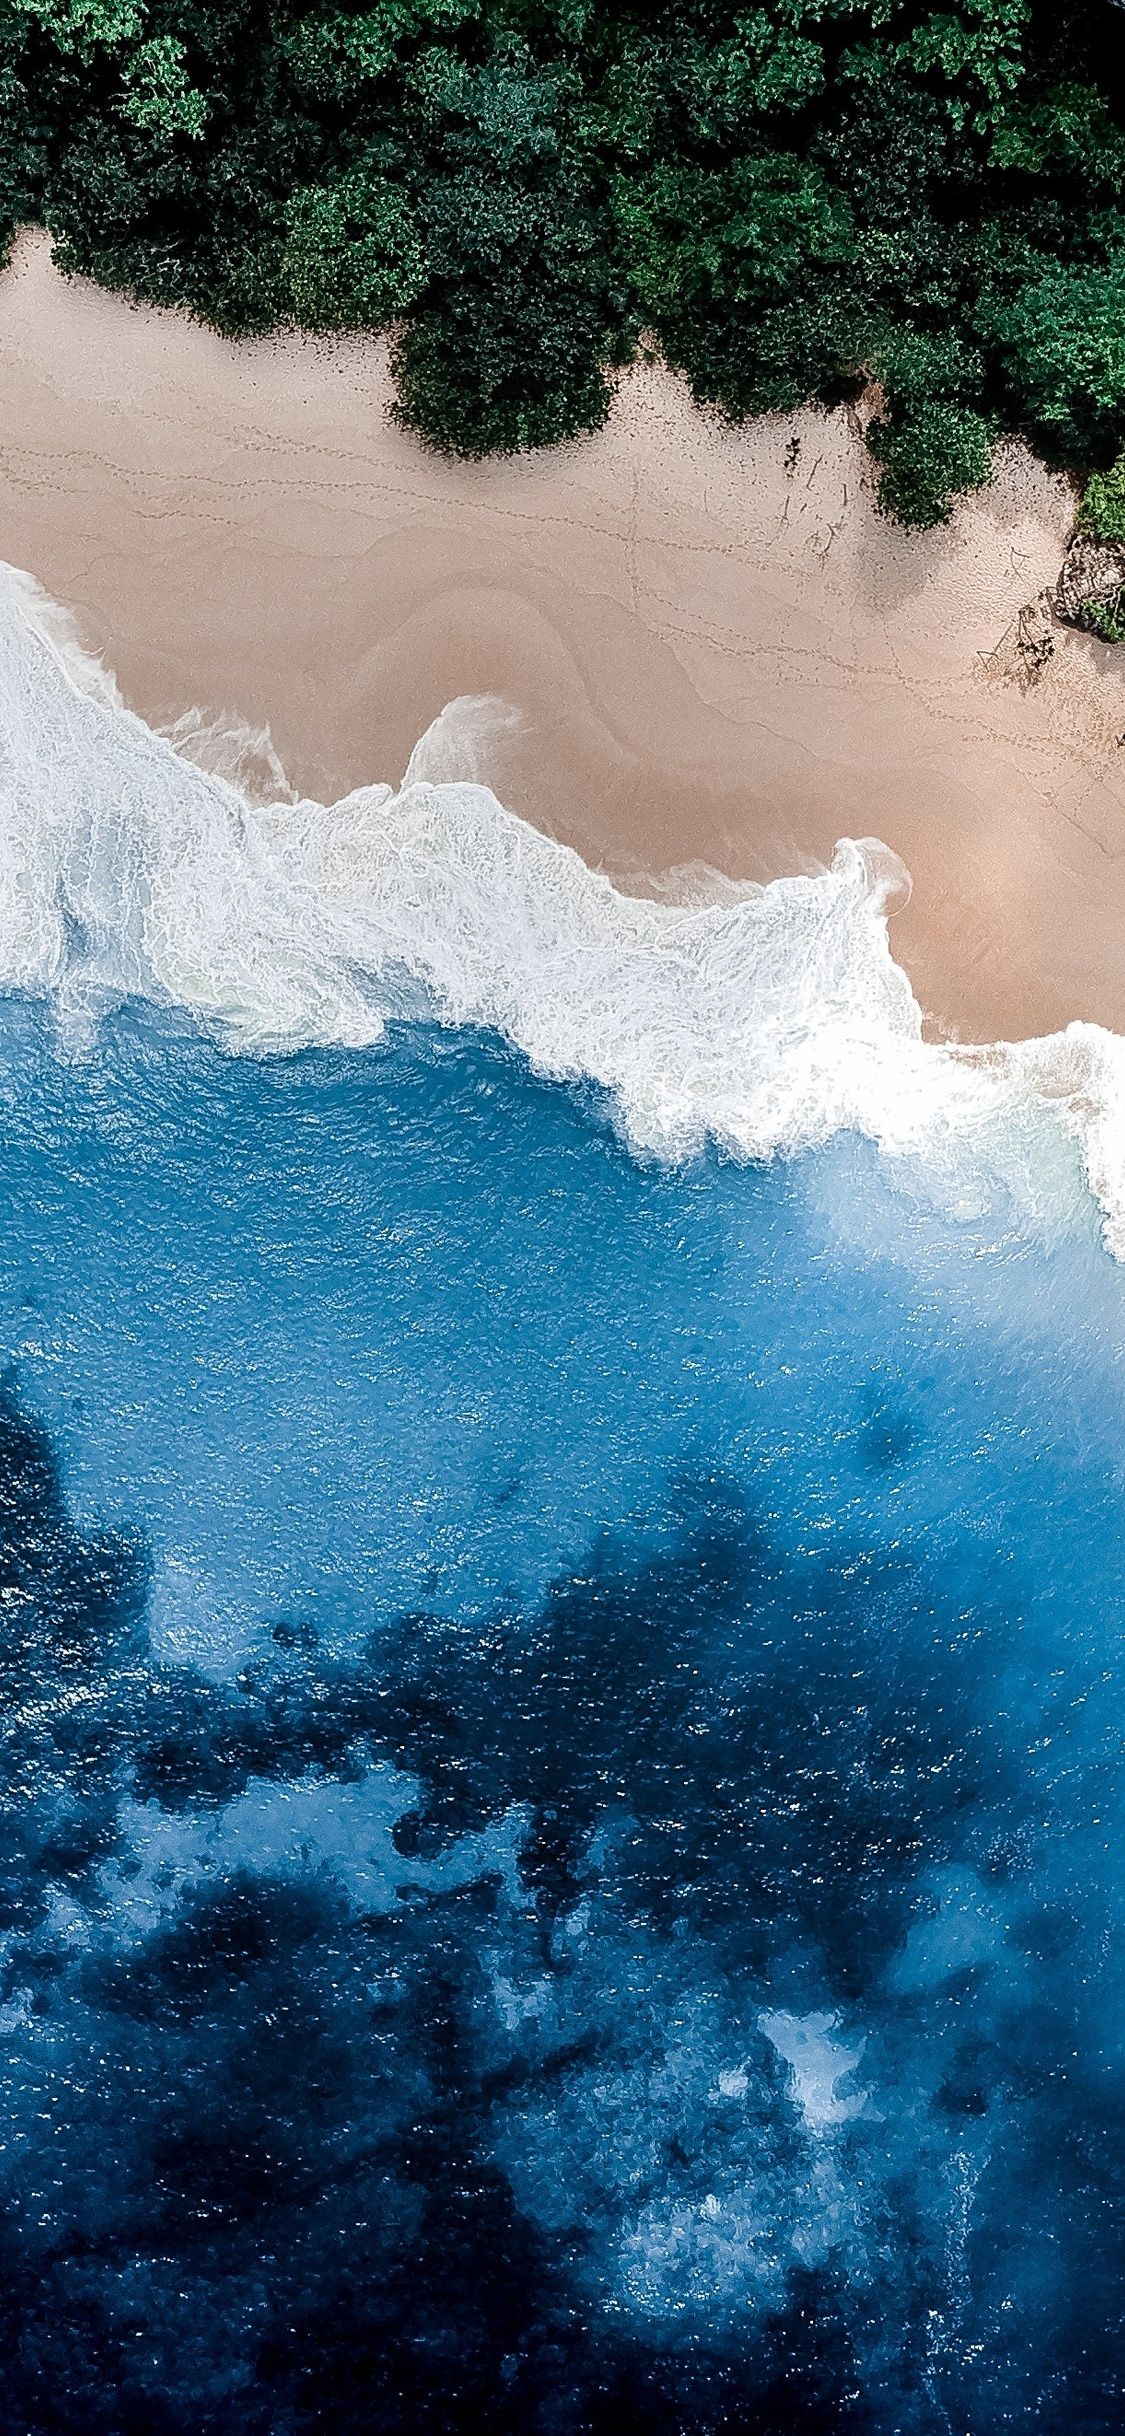 iPhone X 4k Beach Wallpapers - Wallpaper Cave